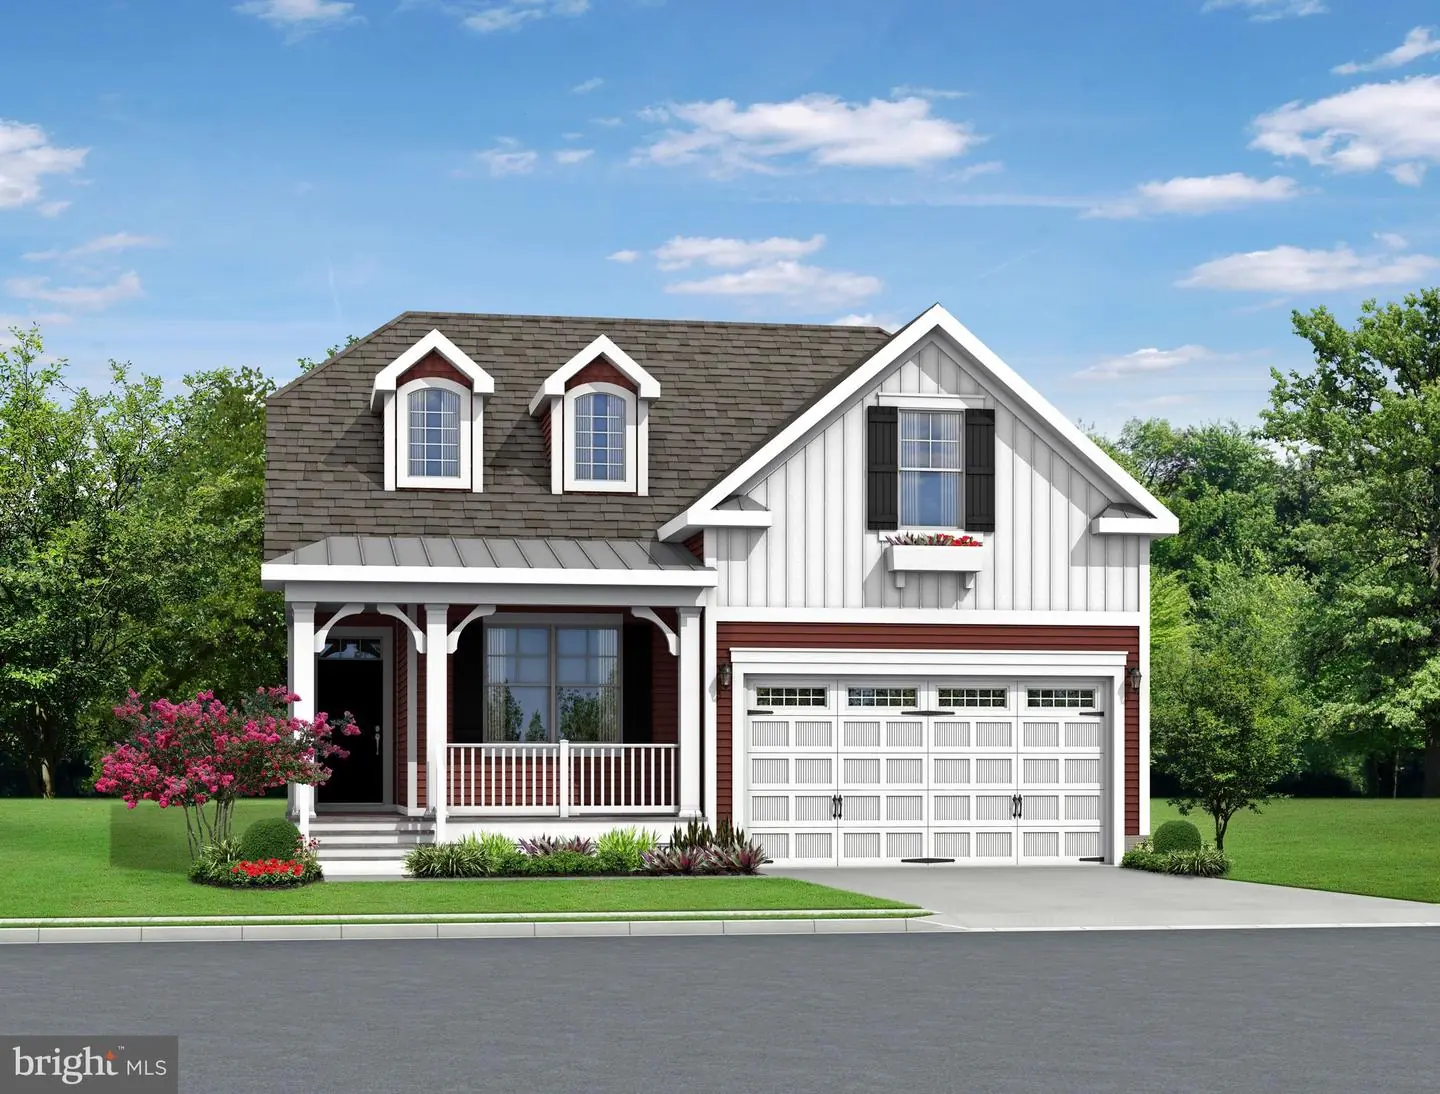 DESU2031440-801988062140-2022-11-02-11-01-29 Iris To-be-built Home Tbd | Millsboro, DE Real Estate For Sale | MLS# Desu2031440  - David T. King Realtor